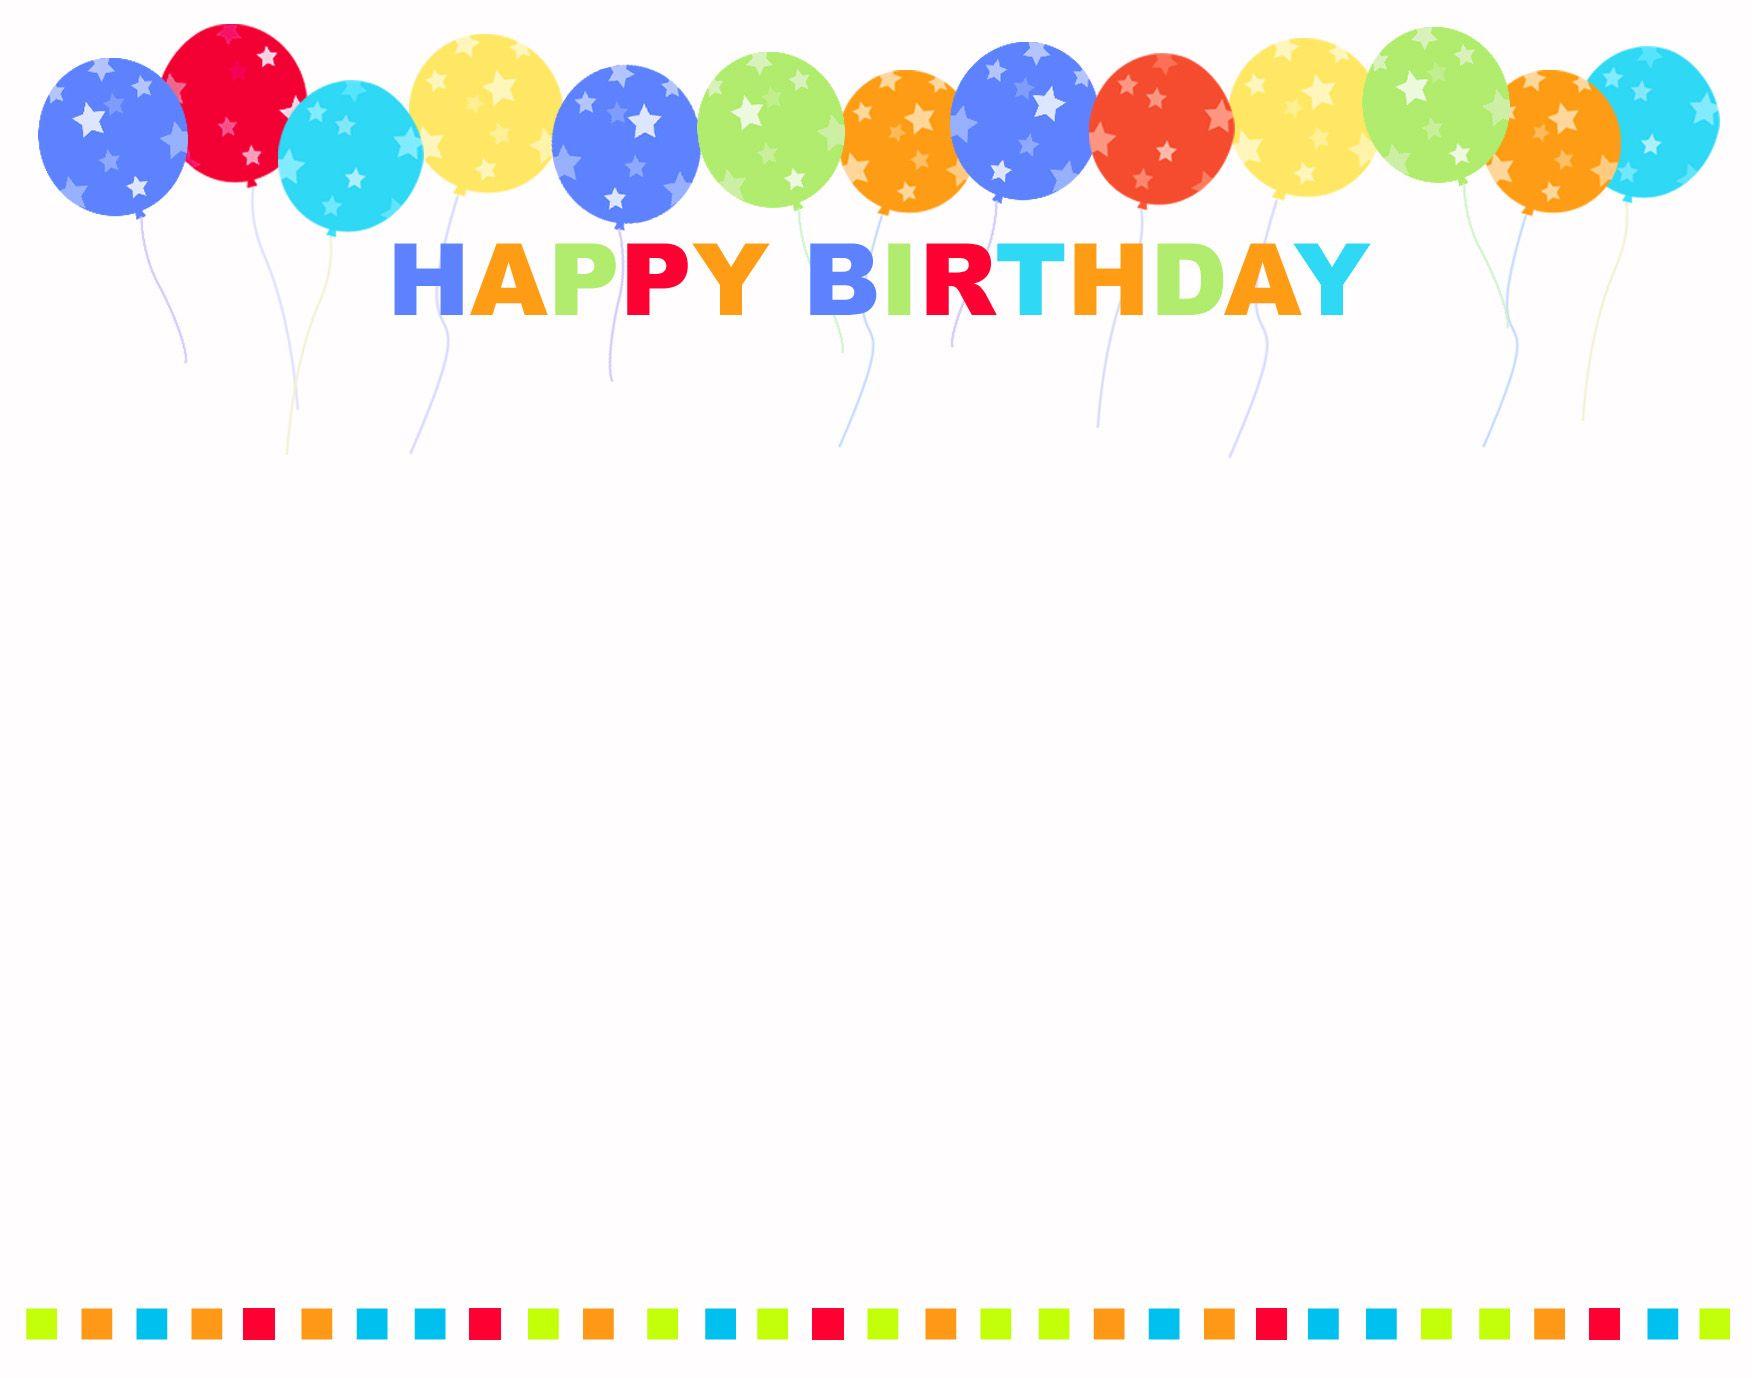 Birthday Balloon Decoration Image With White Background